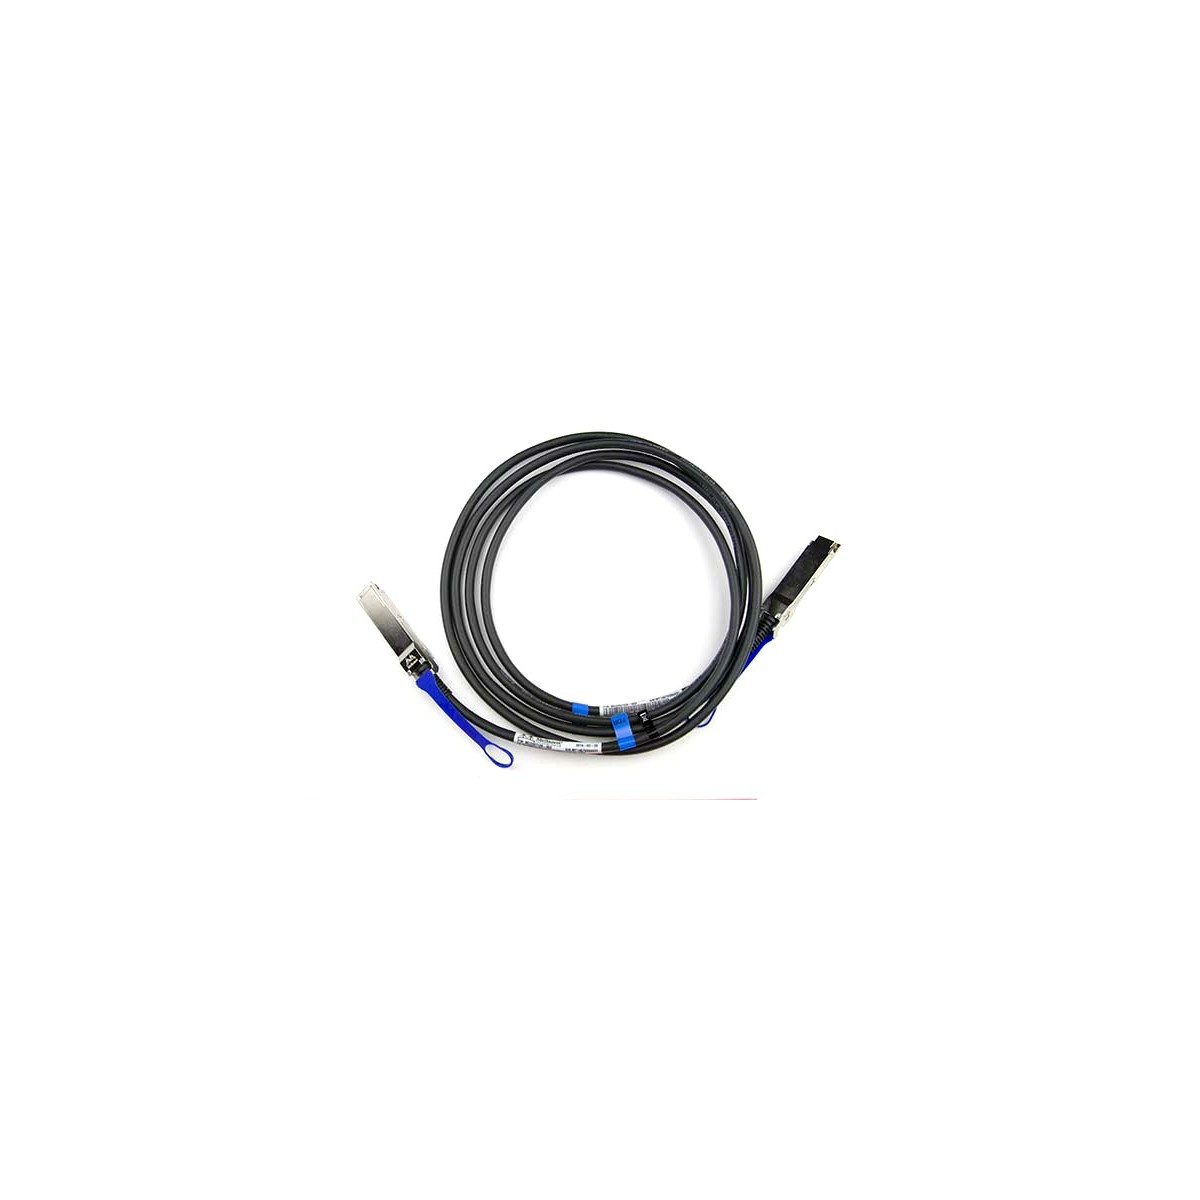 Supermicro CBL-0496L - 3 m - QSFP - QSFP - Male/Male - Black,Blue,Metallic - 56 Gbit/s